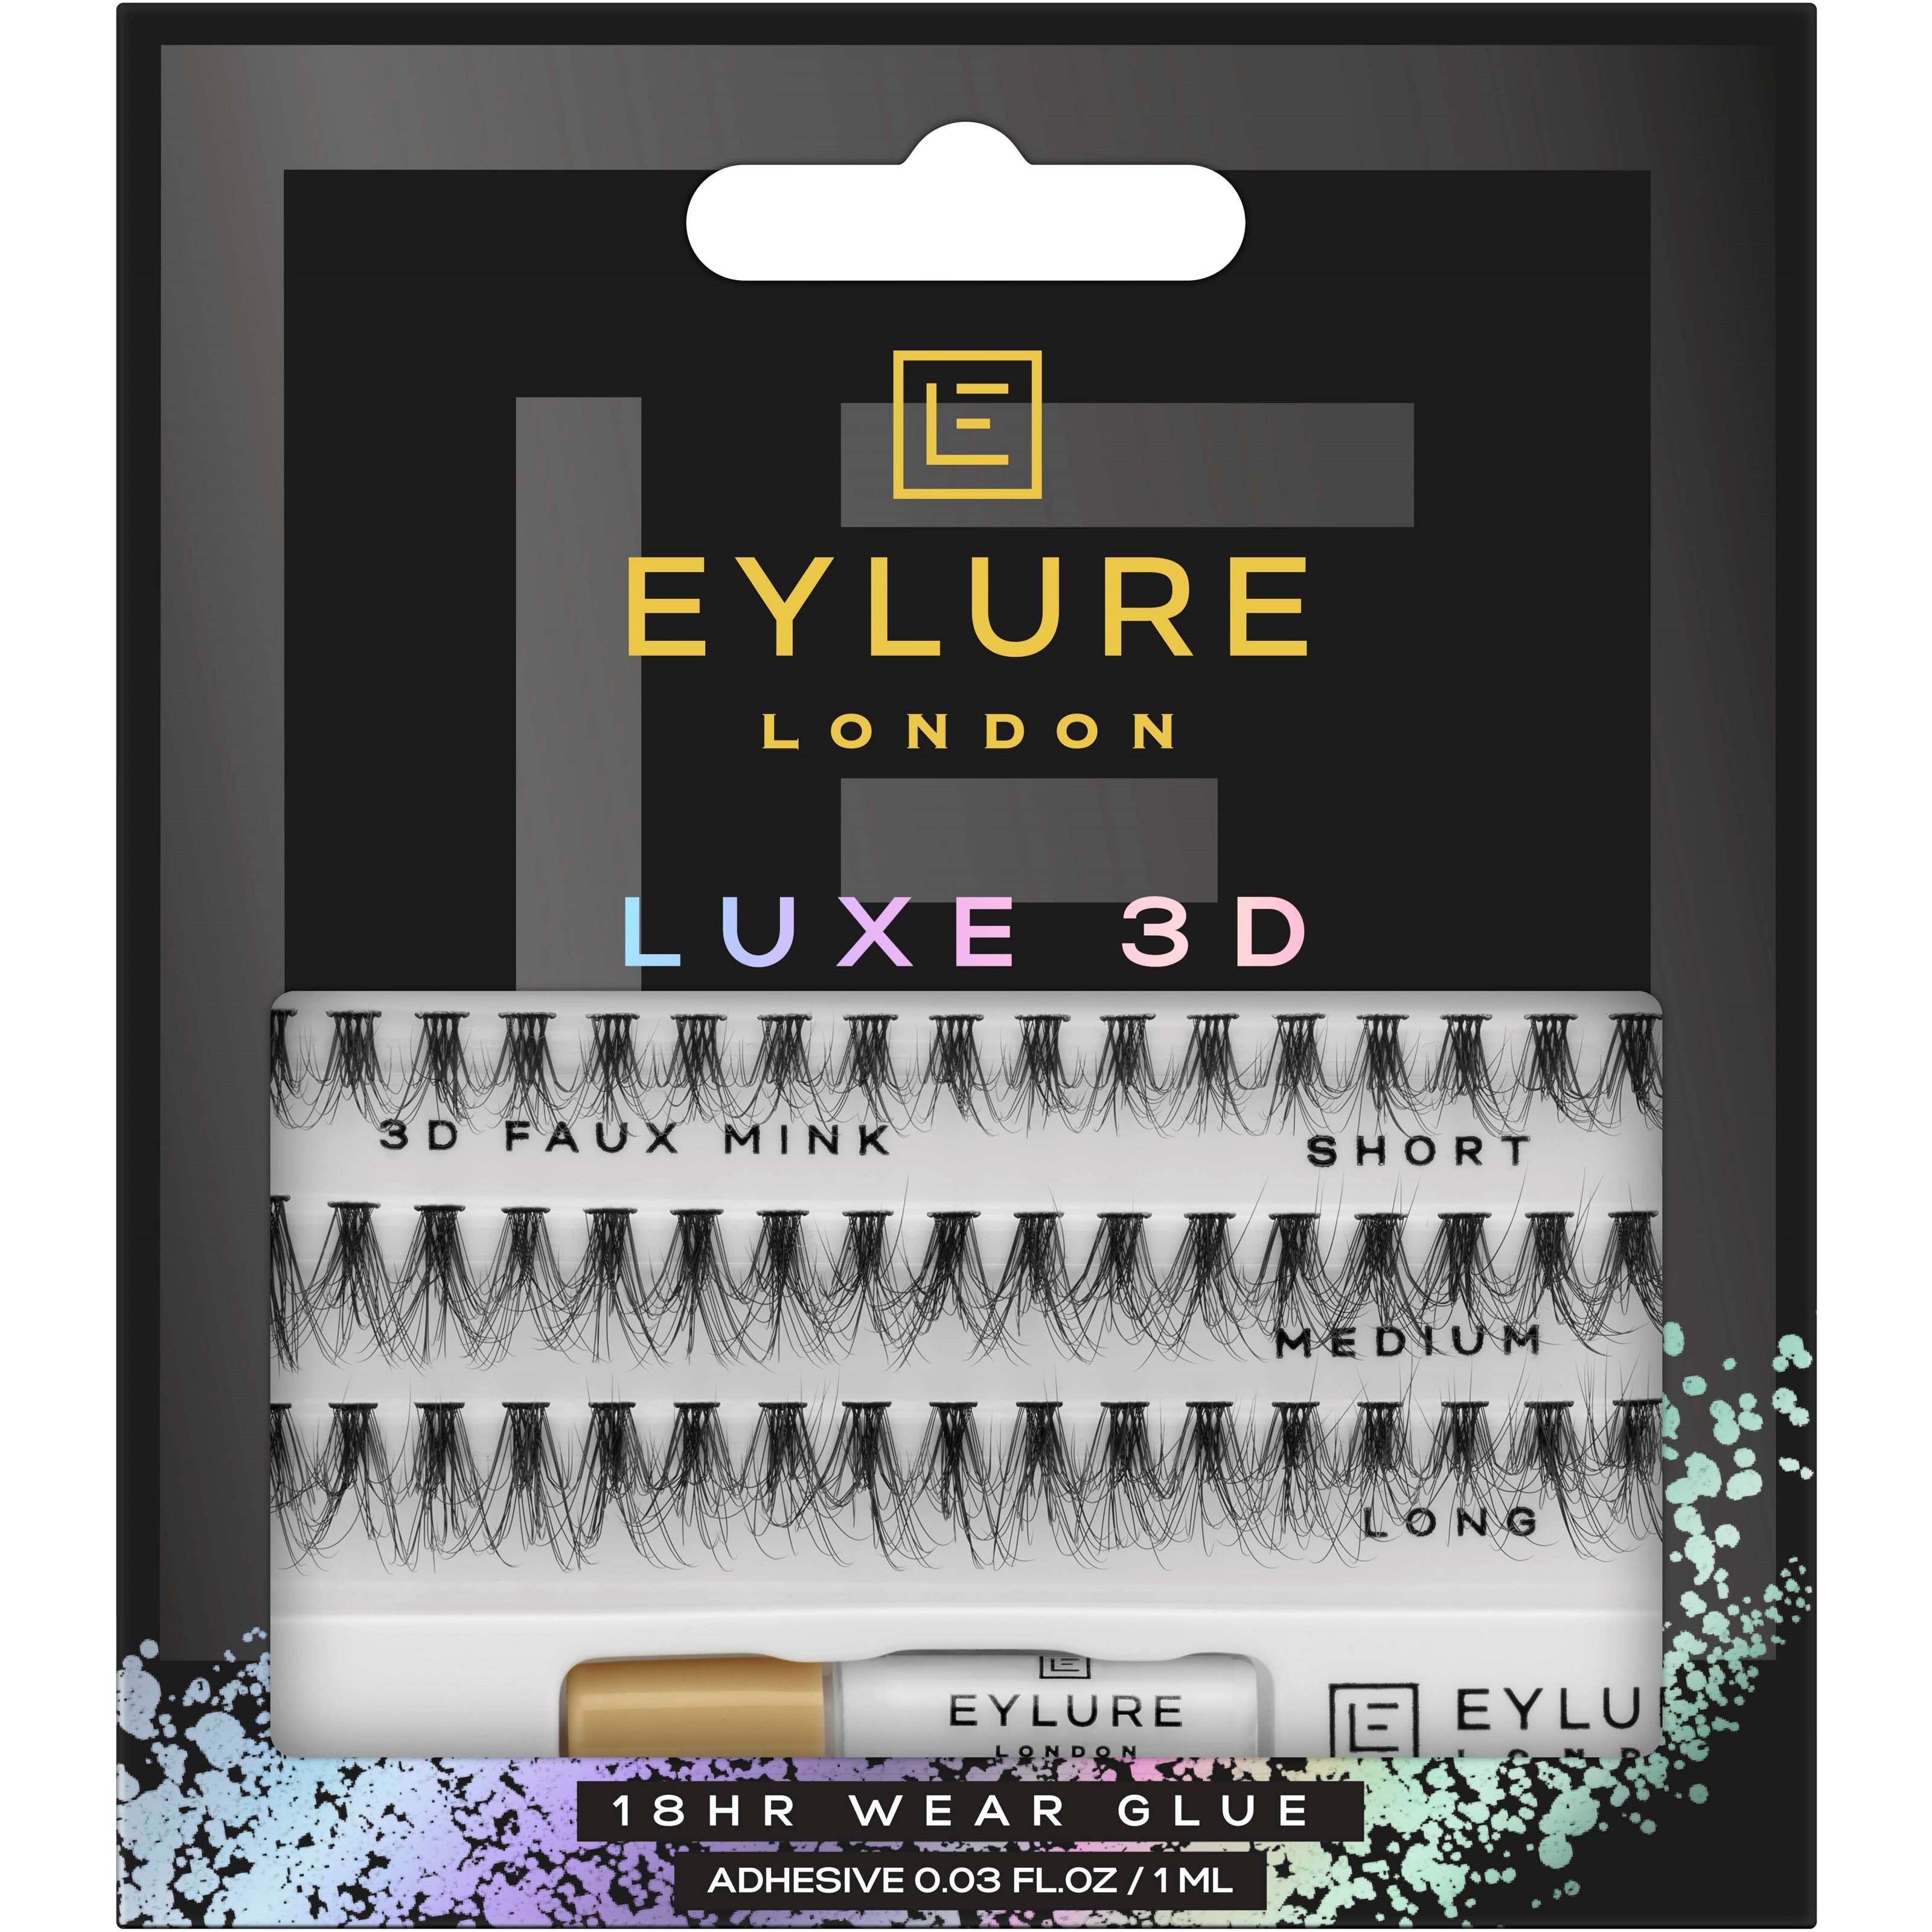 Eylure Luxe 3D Individuals